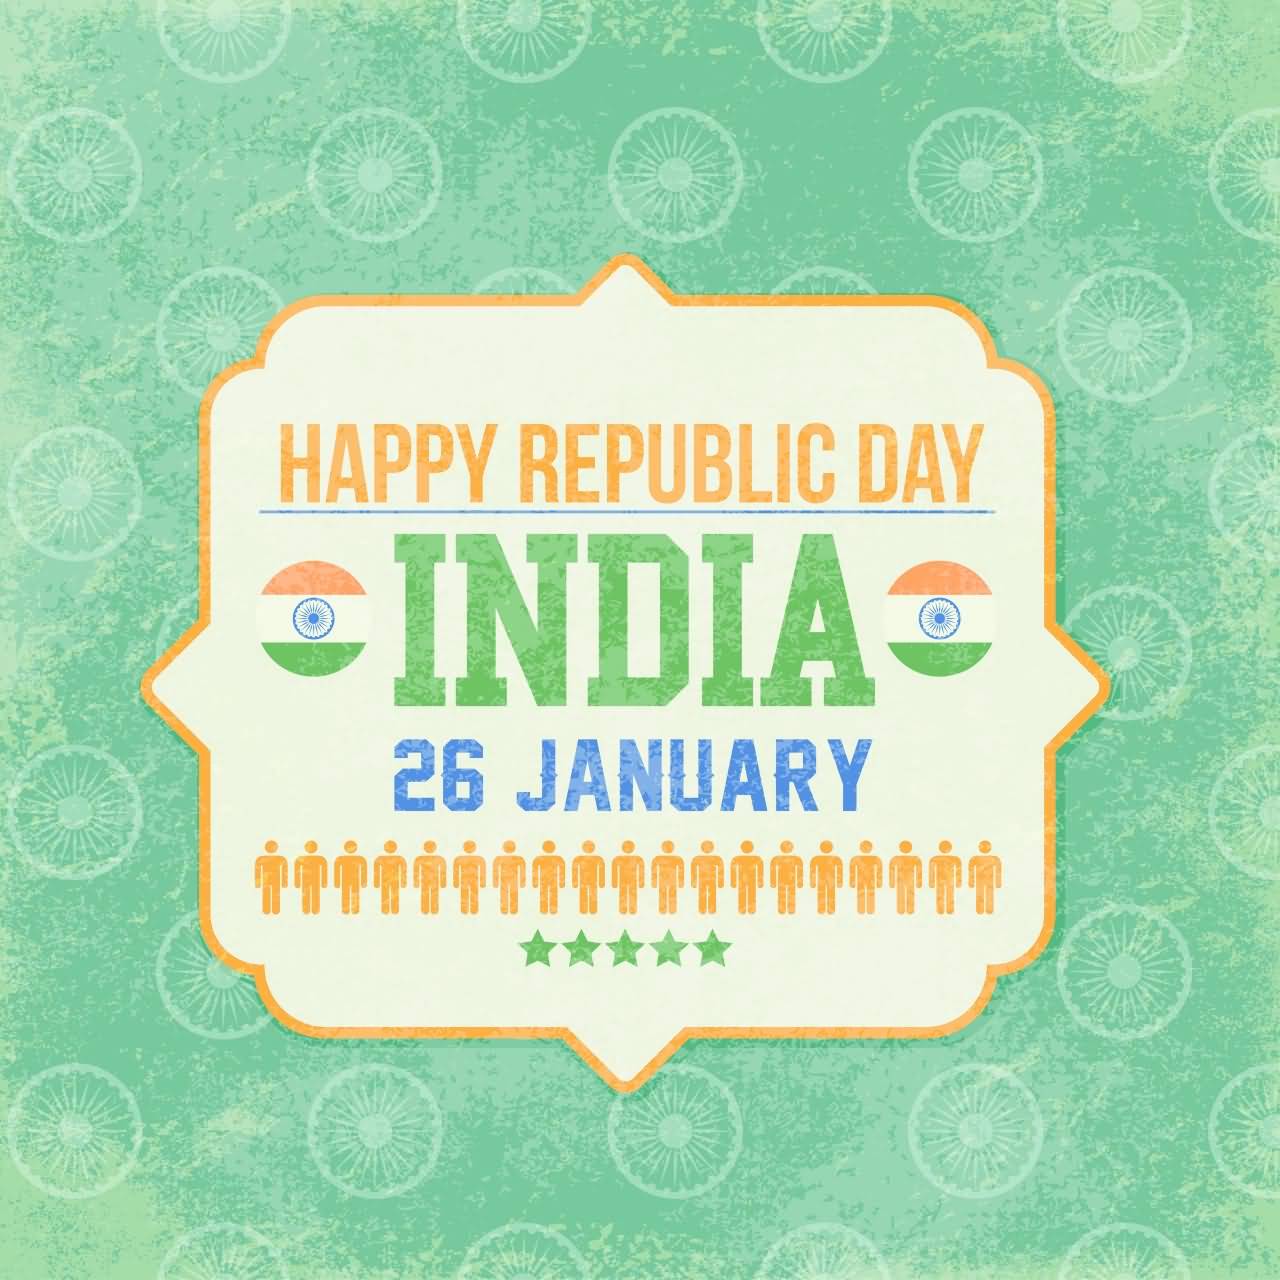 Happy Republic Day India 26 January Greeting Card